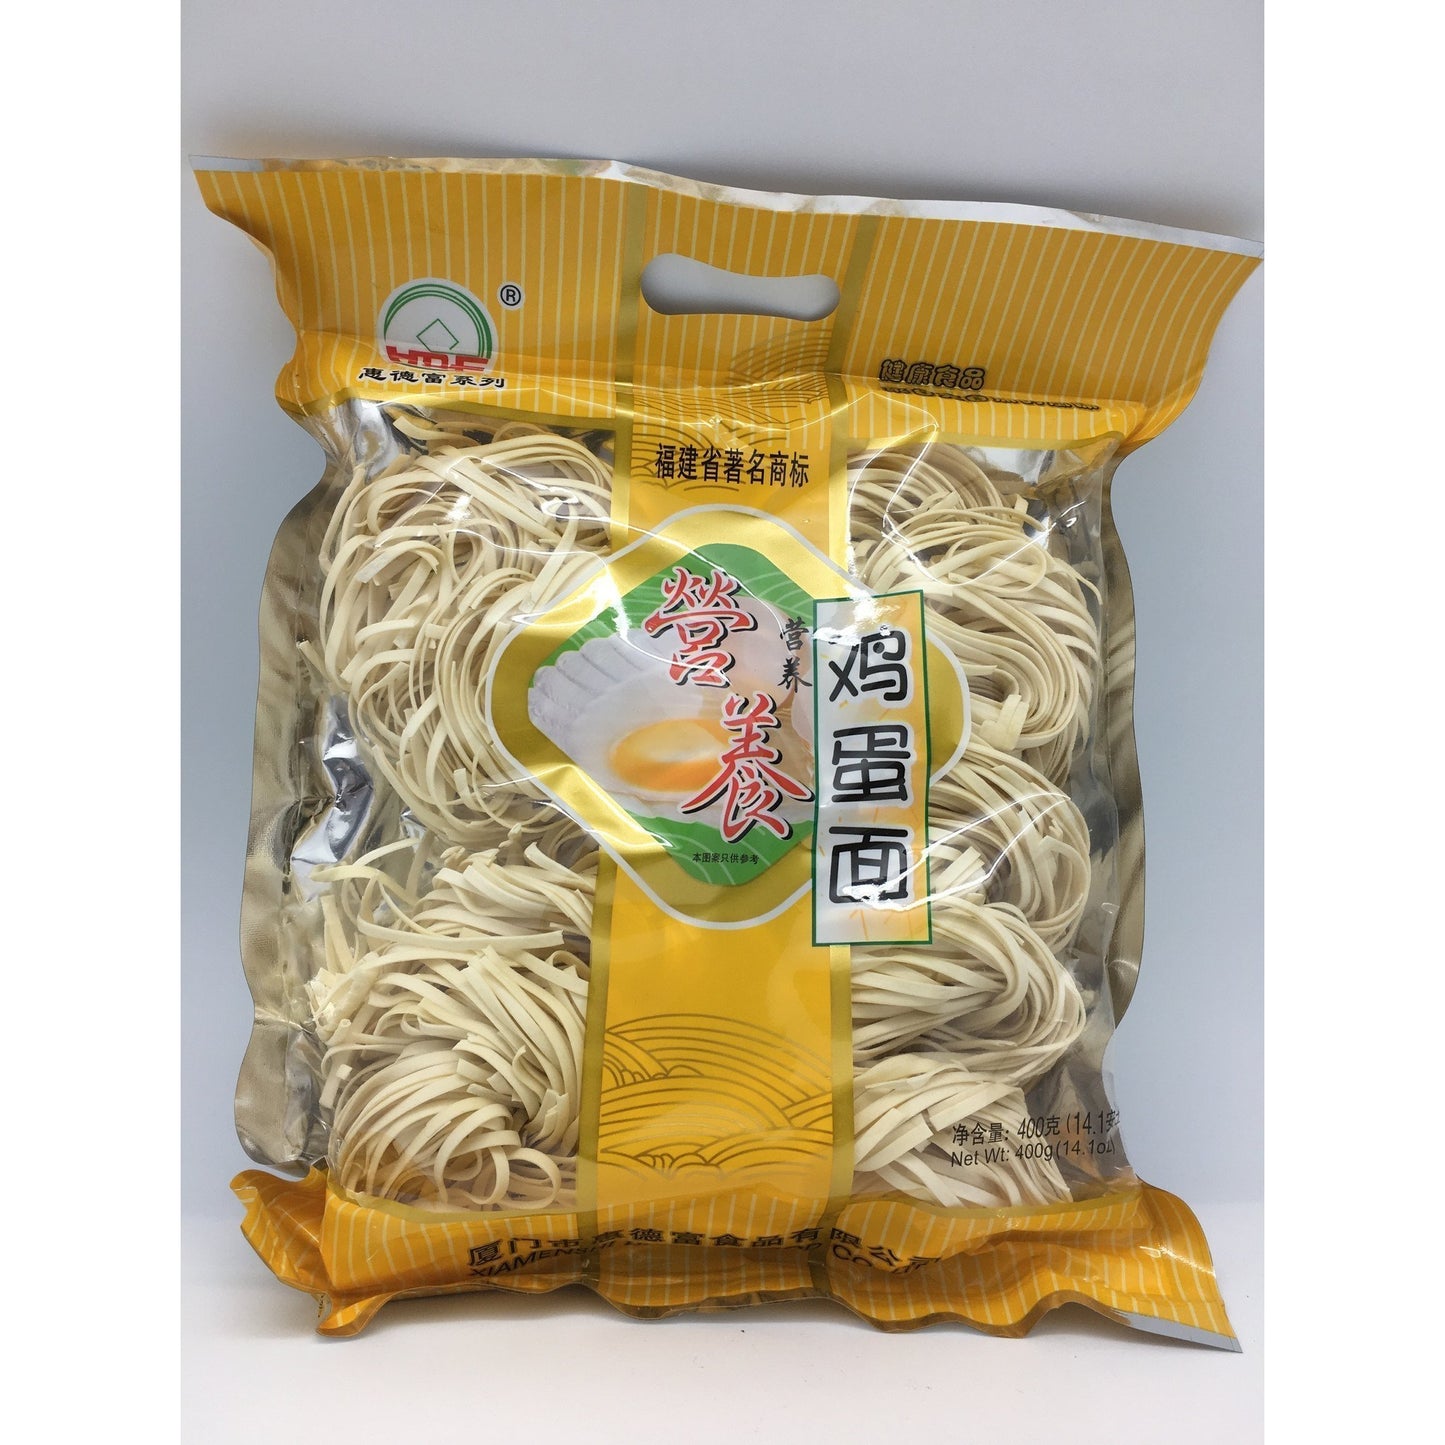 N016E HDF Brand - Dried Egg Noodles 400g - 10 bags / 1CTN - New Eastland Pty Ltd - Asian food wholesalers